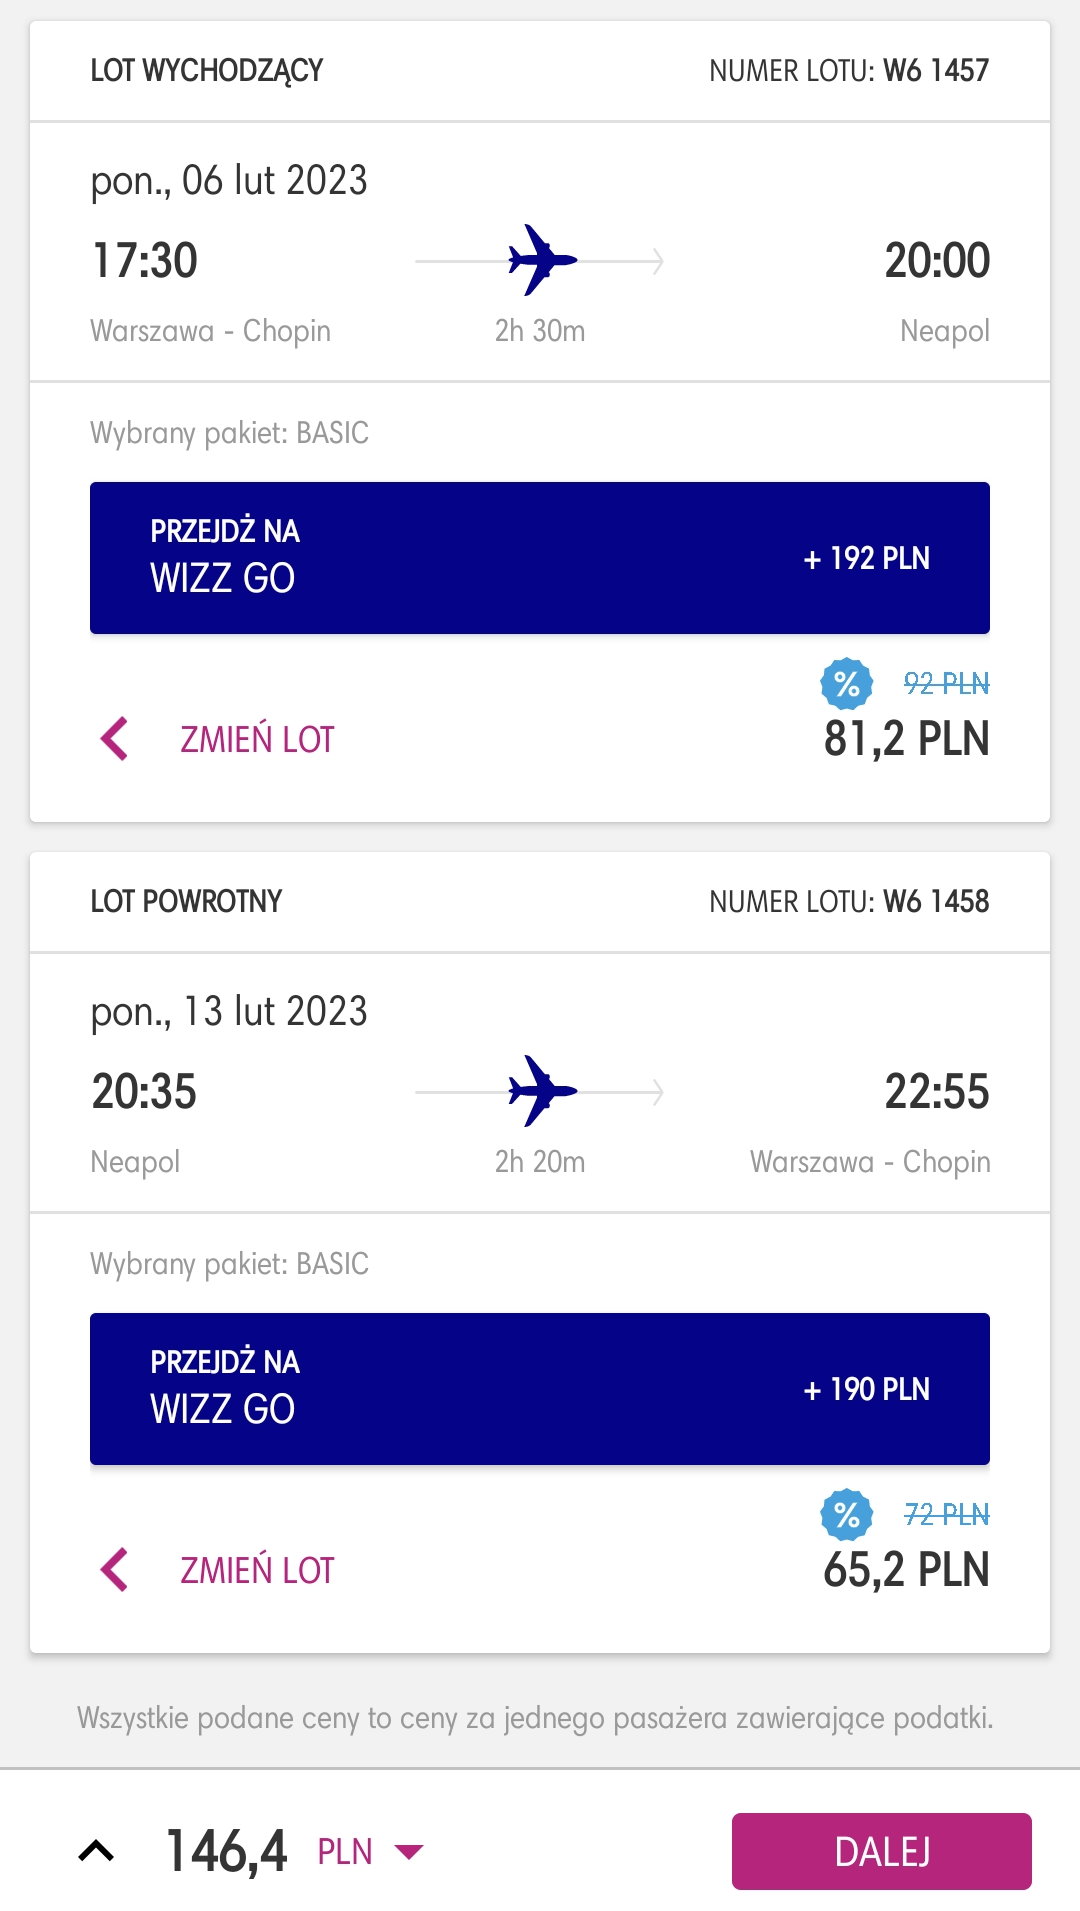 wizz air promo code 2019 - TravelFree